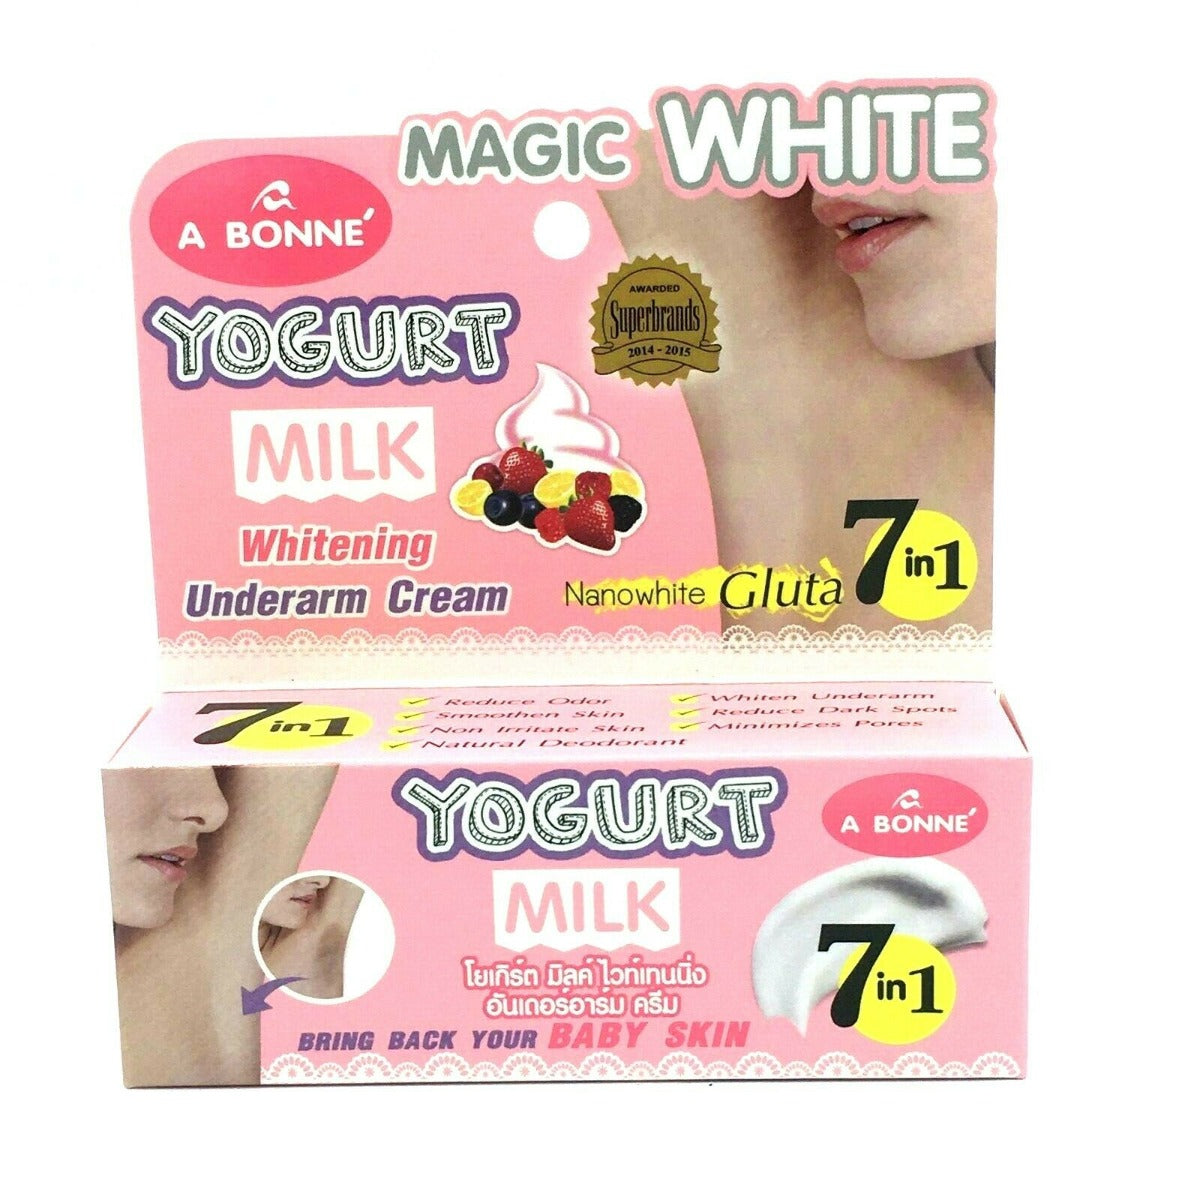 A Bonne Magic White Yogurt Milk Whitening Underarm Cream (30 g)